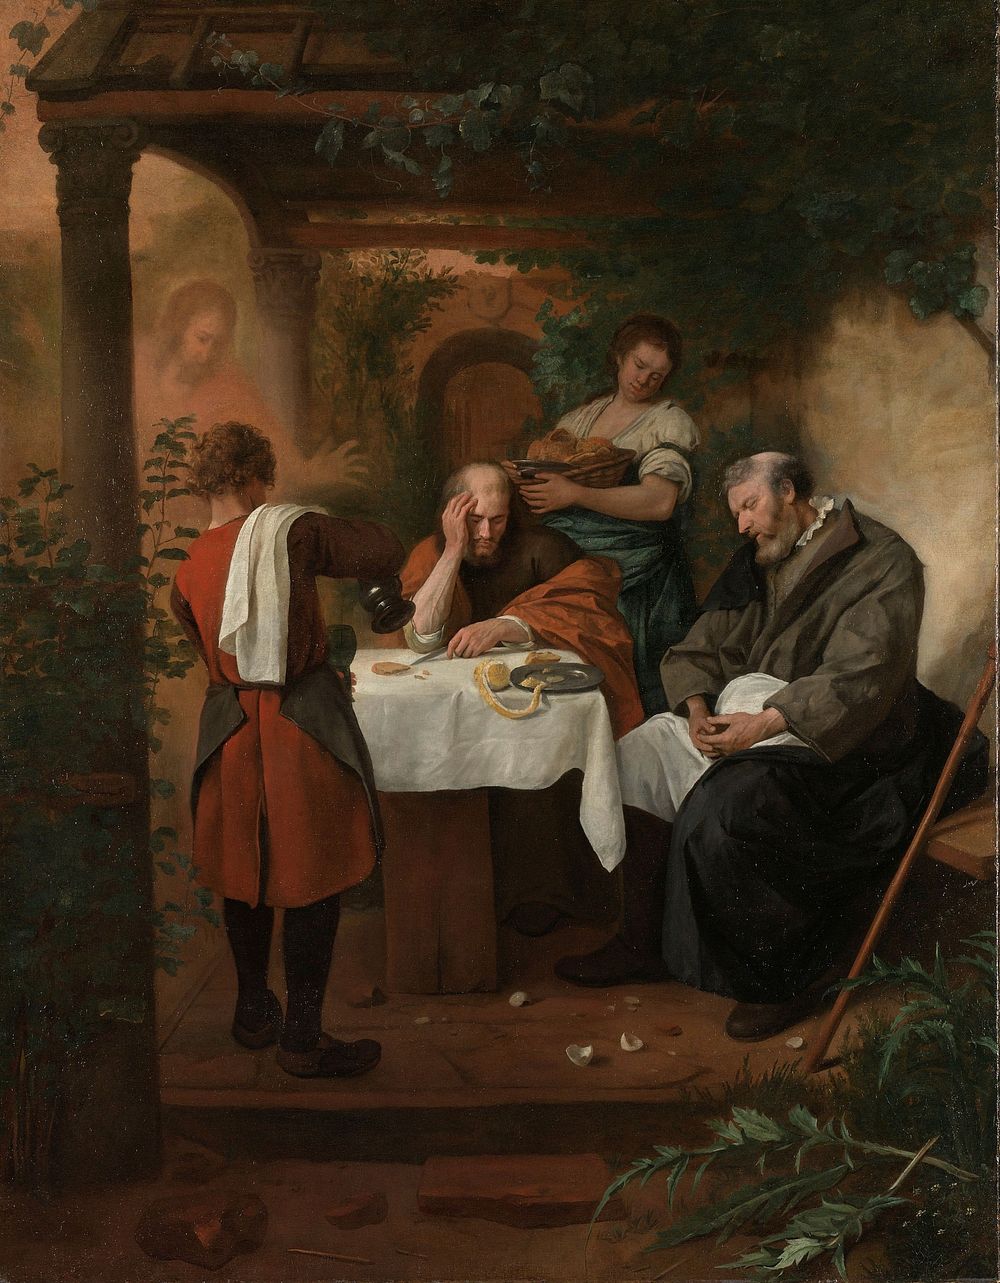 Supper at Emmaus (c. 1665 - c. 1668) by Jan Havicksz Steen